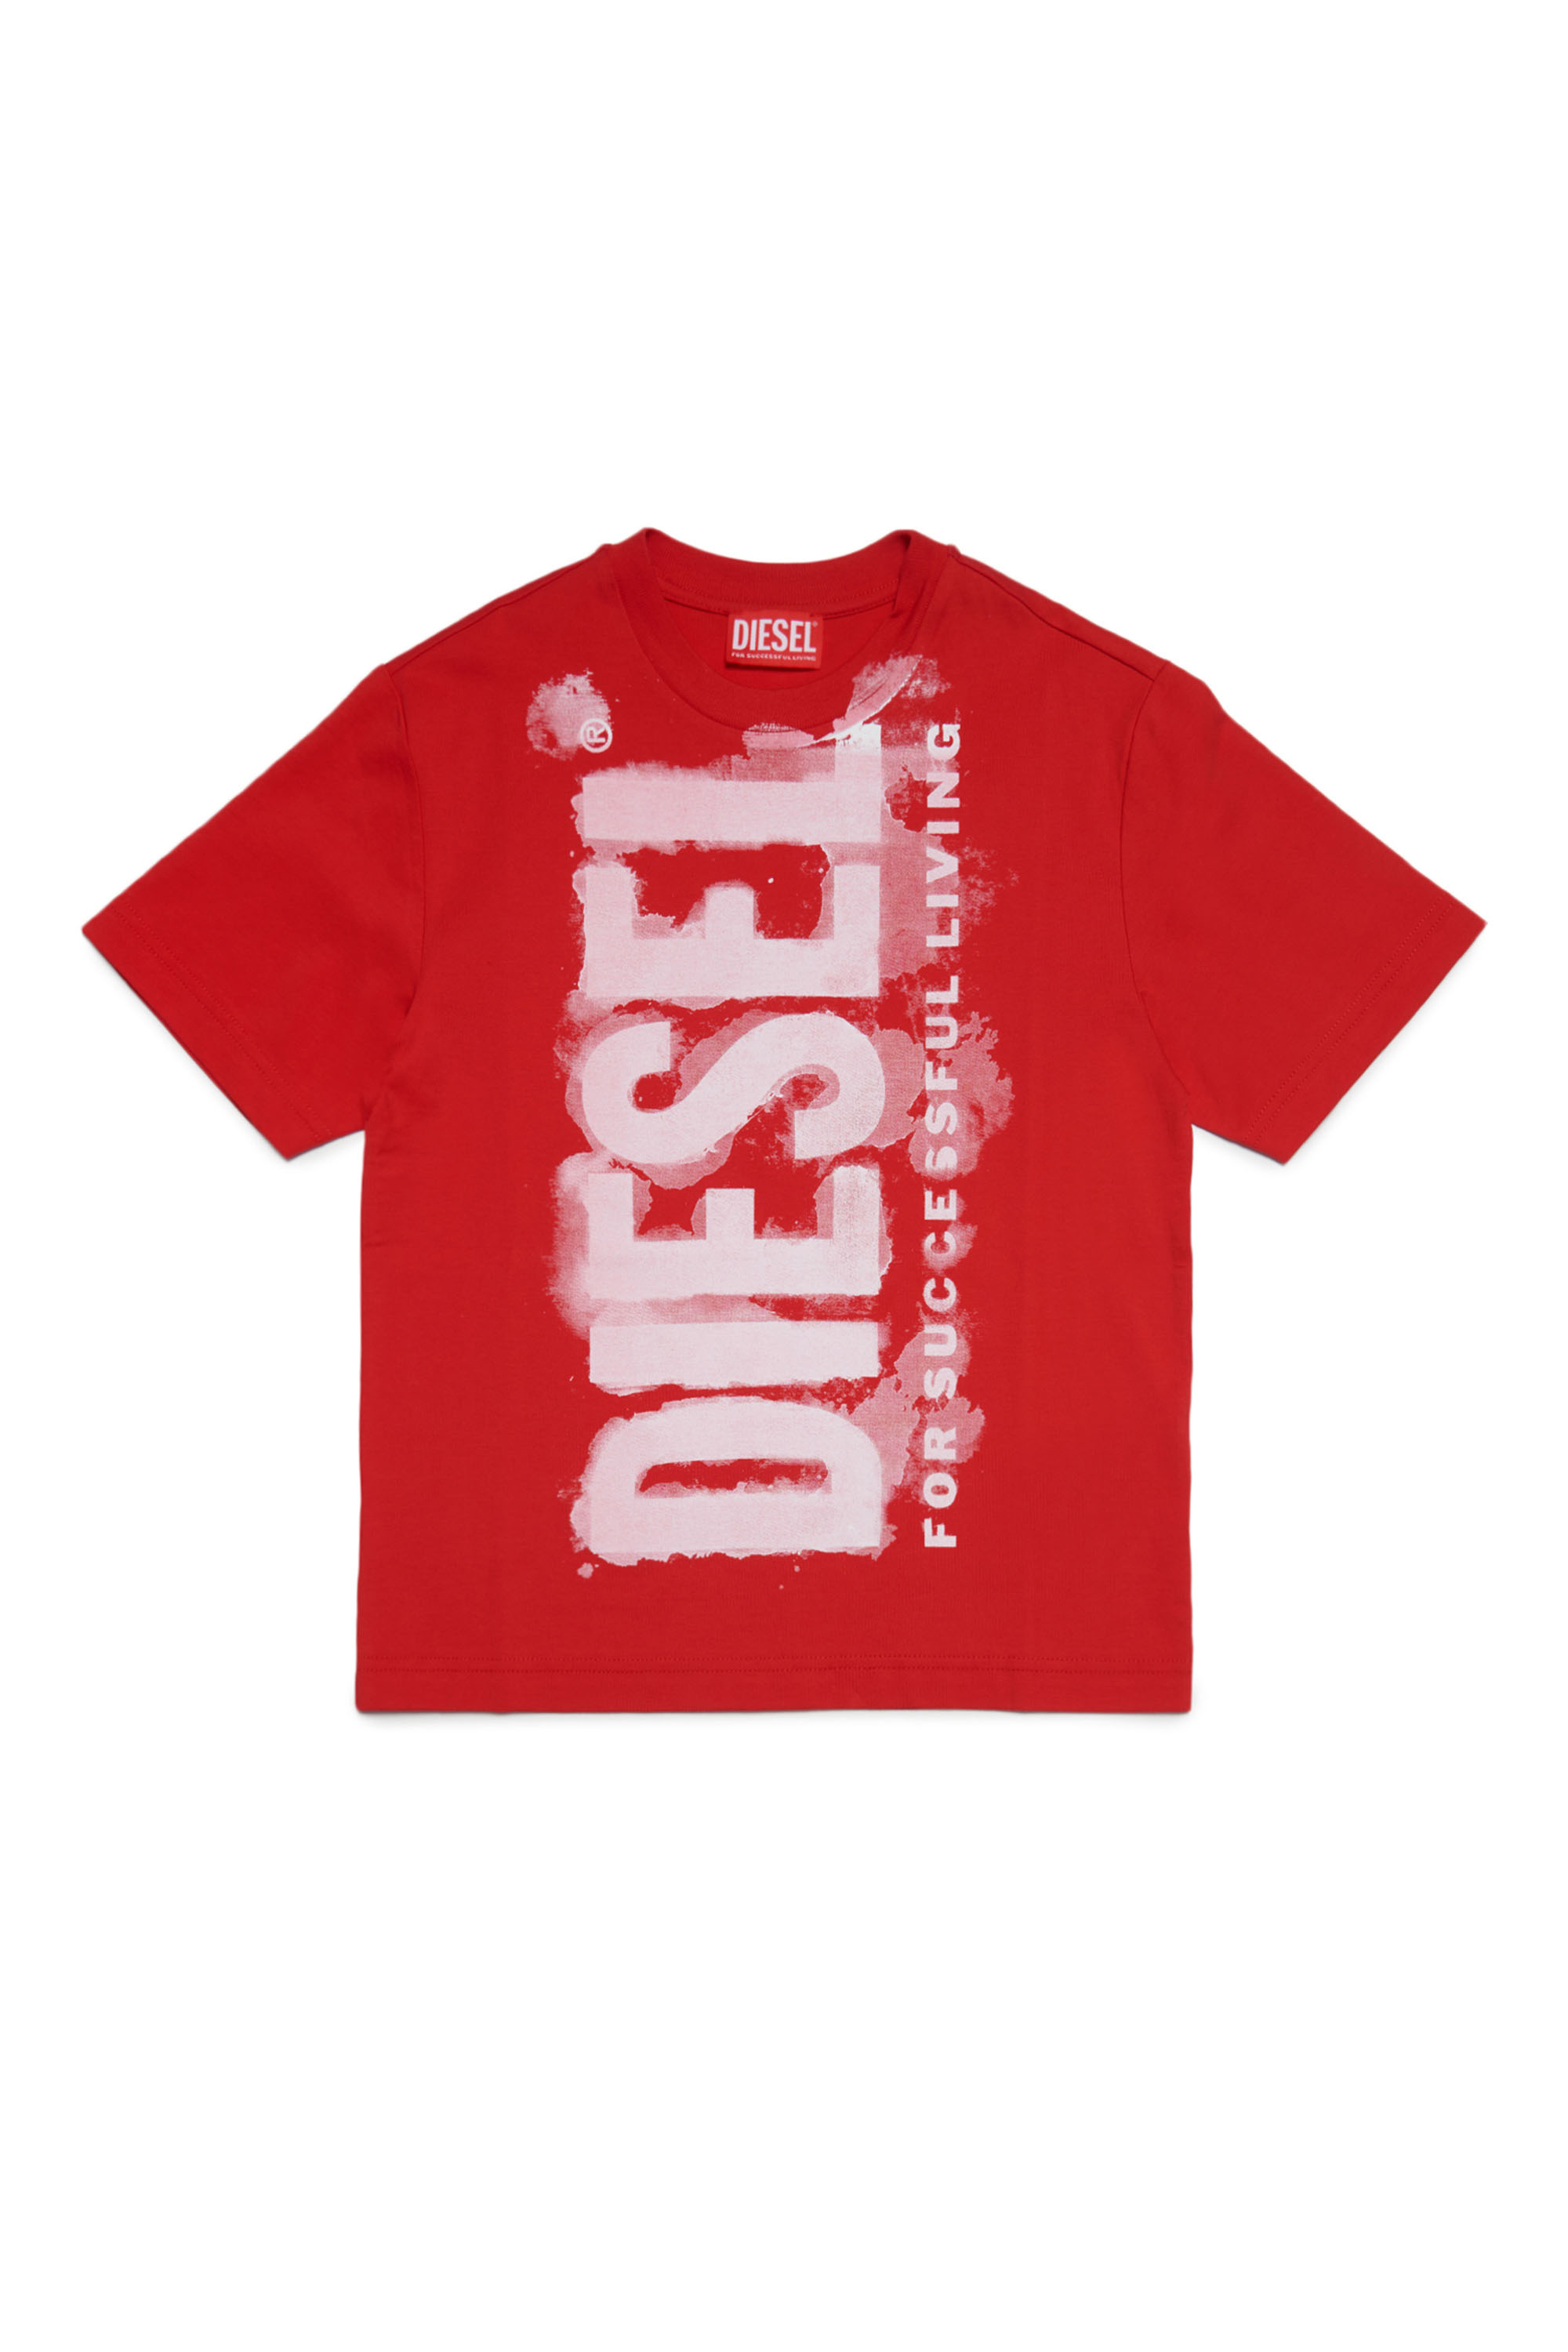 Diesel - TJUSTE16 OVER, Rosso - Image 1